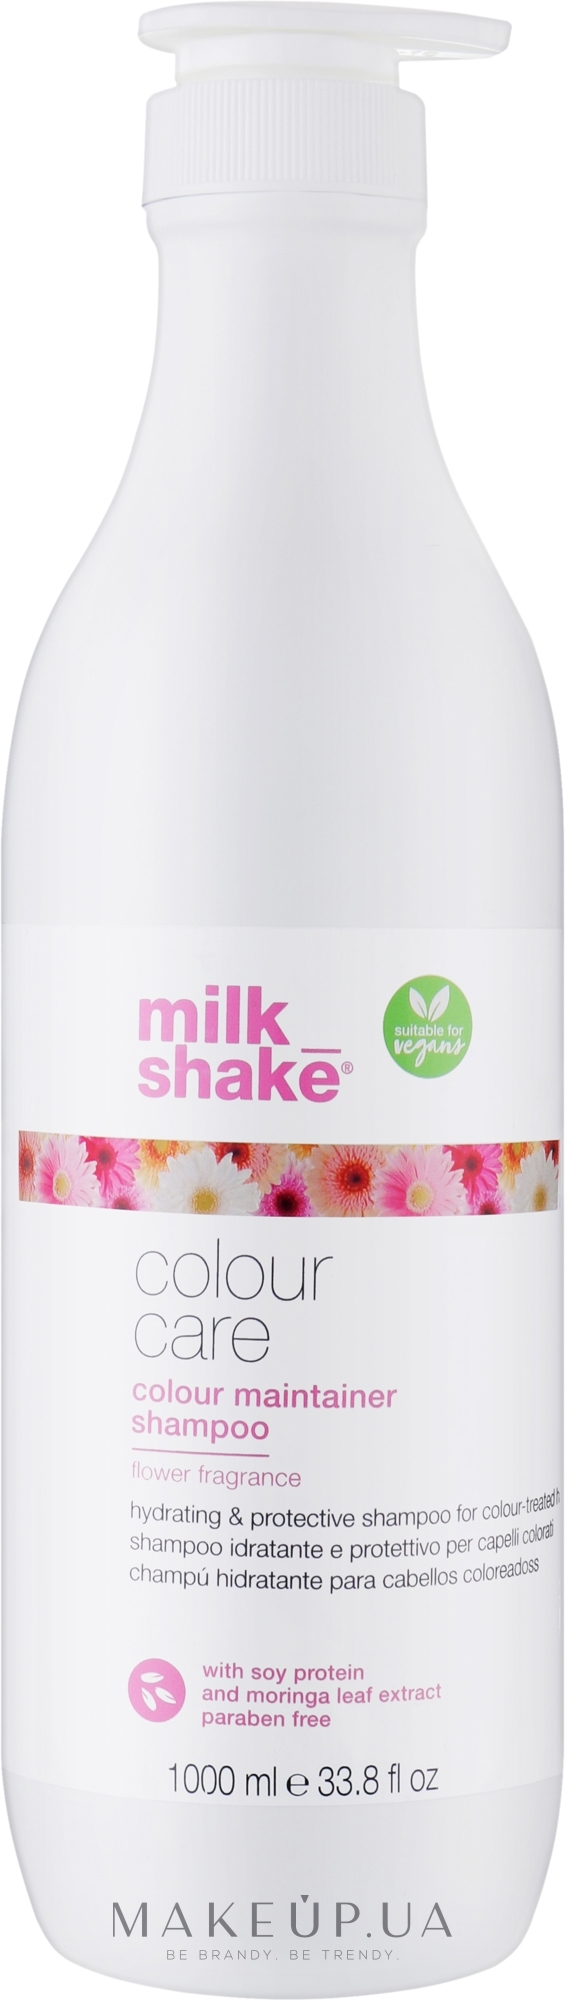 Шампунь для фарбованого волосся з квітковим ароматом - Milk_Shake Color Care Maintainer Shampoo Flower Fragrance — фото 1000ml